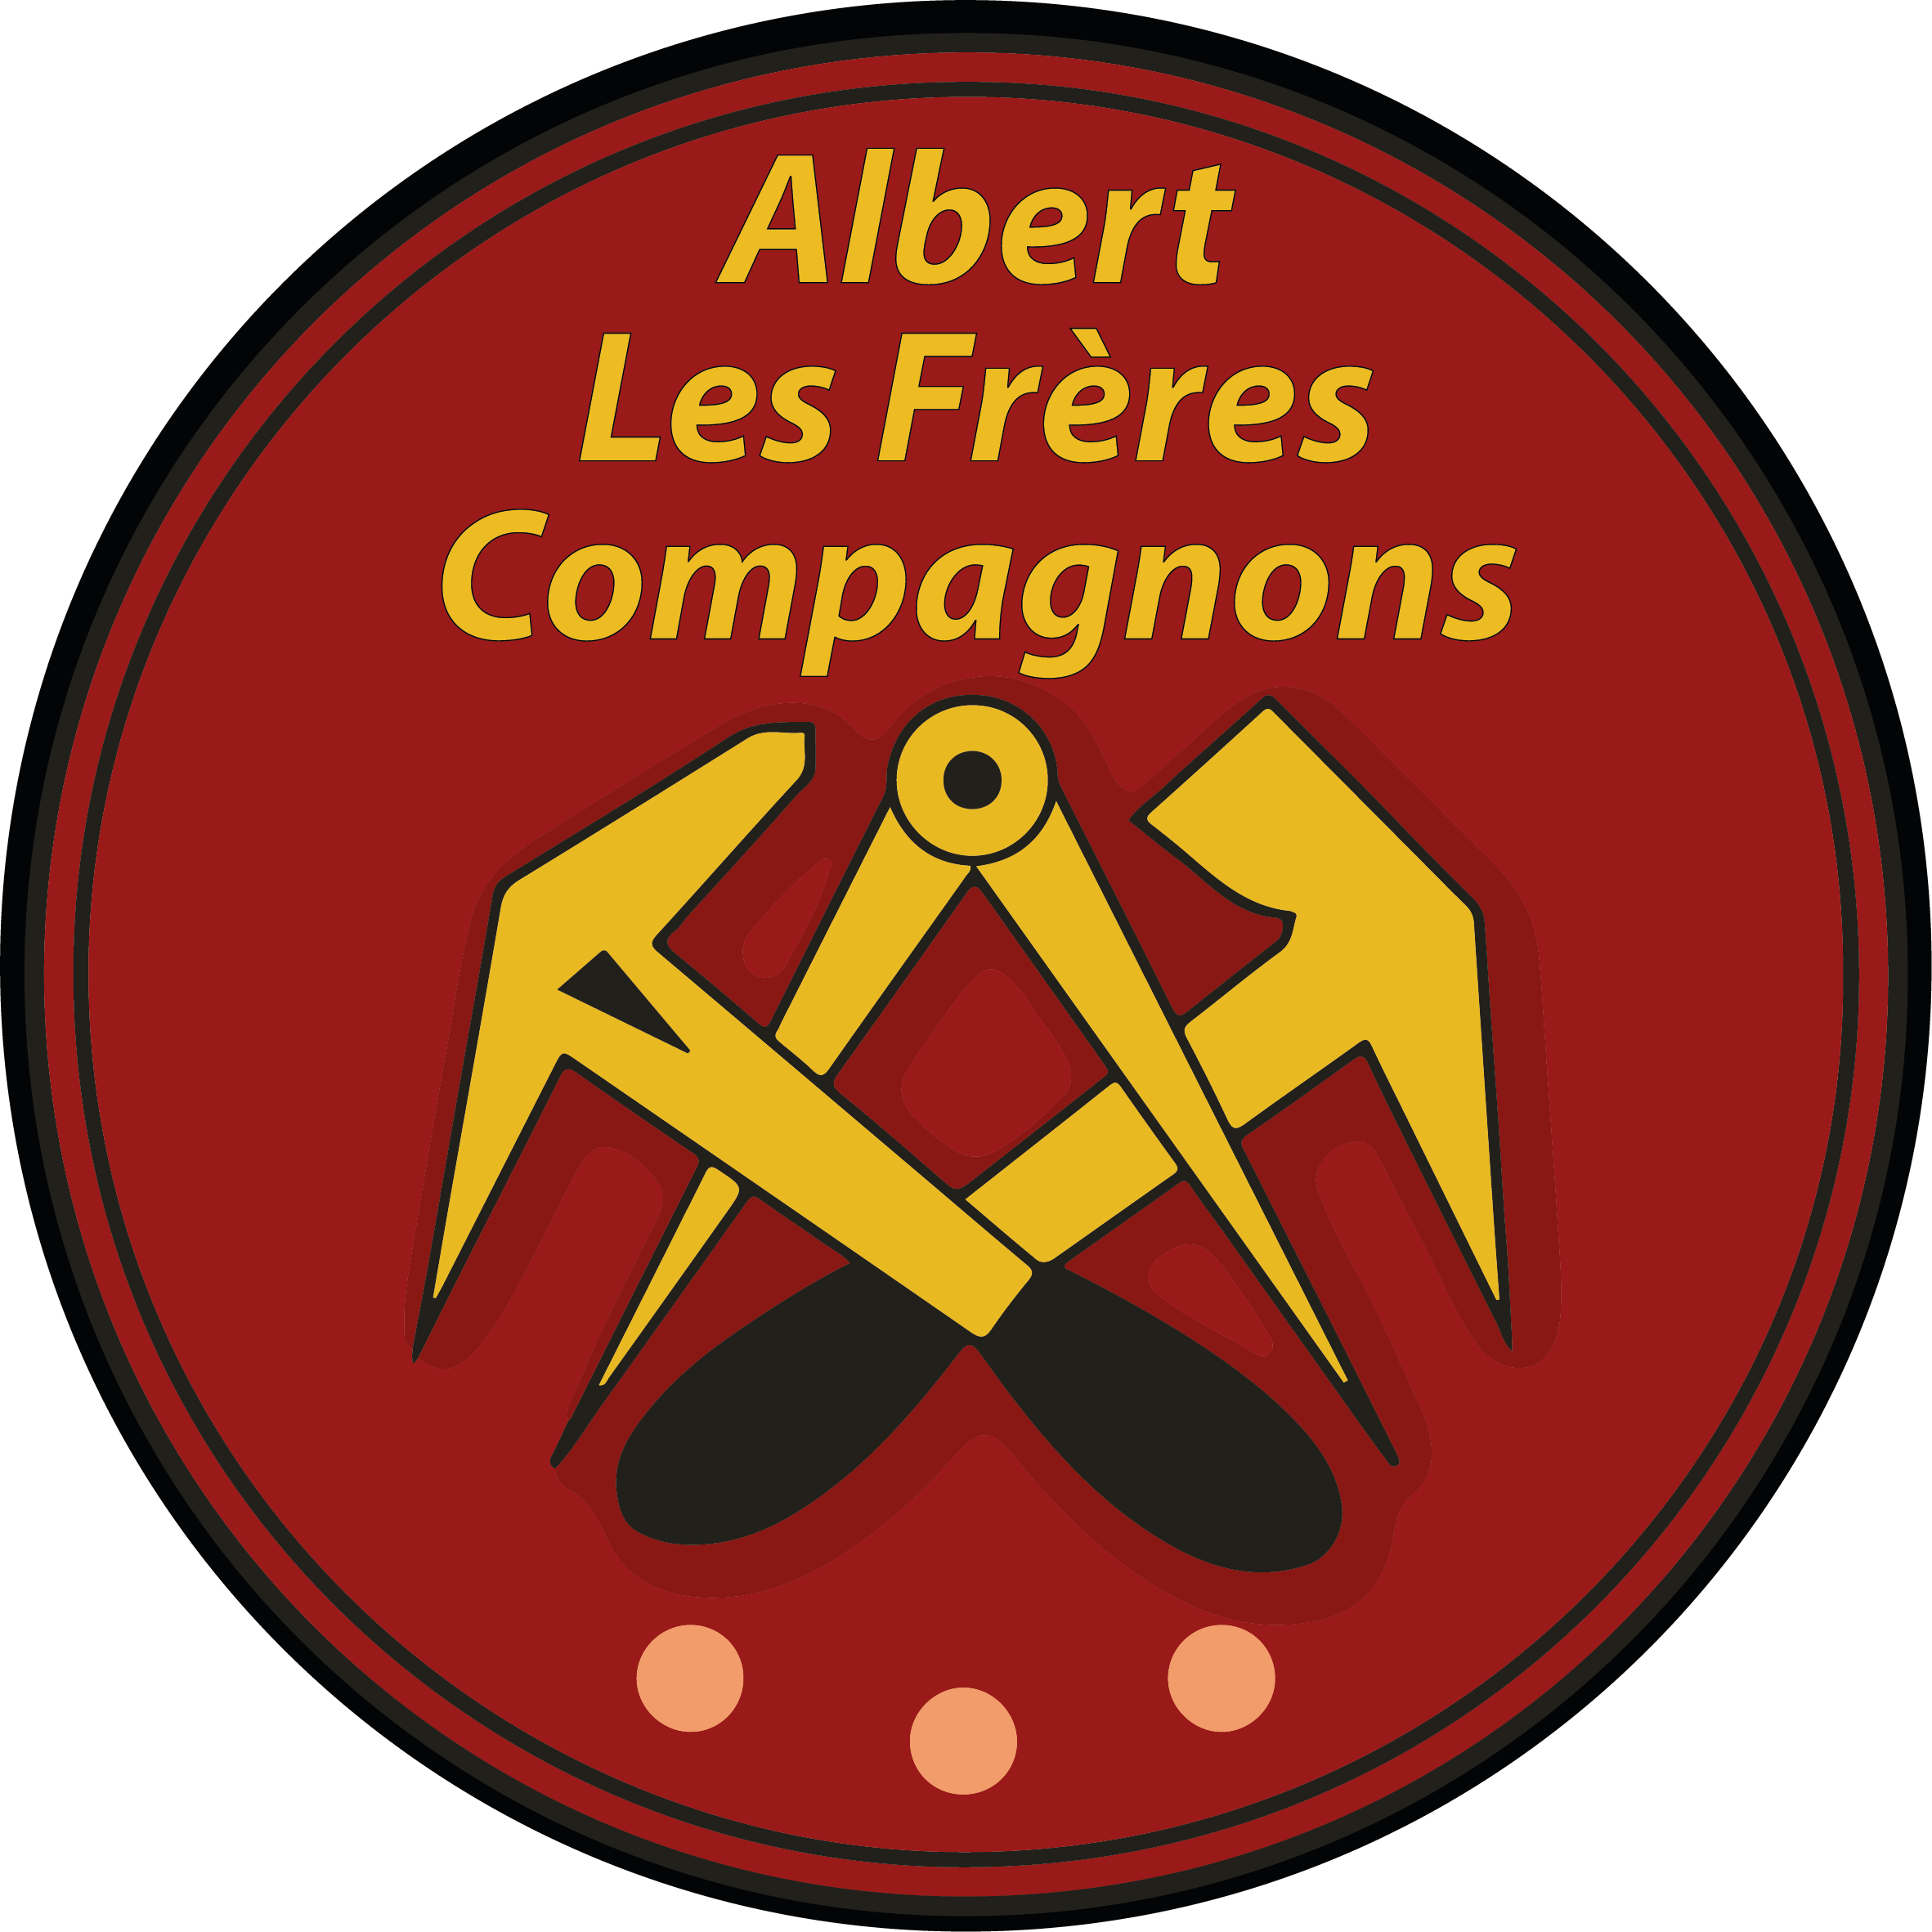 Albert Les Freres Compagnons